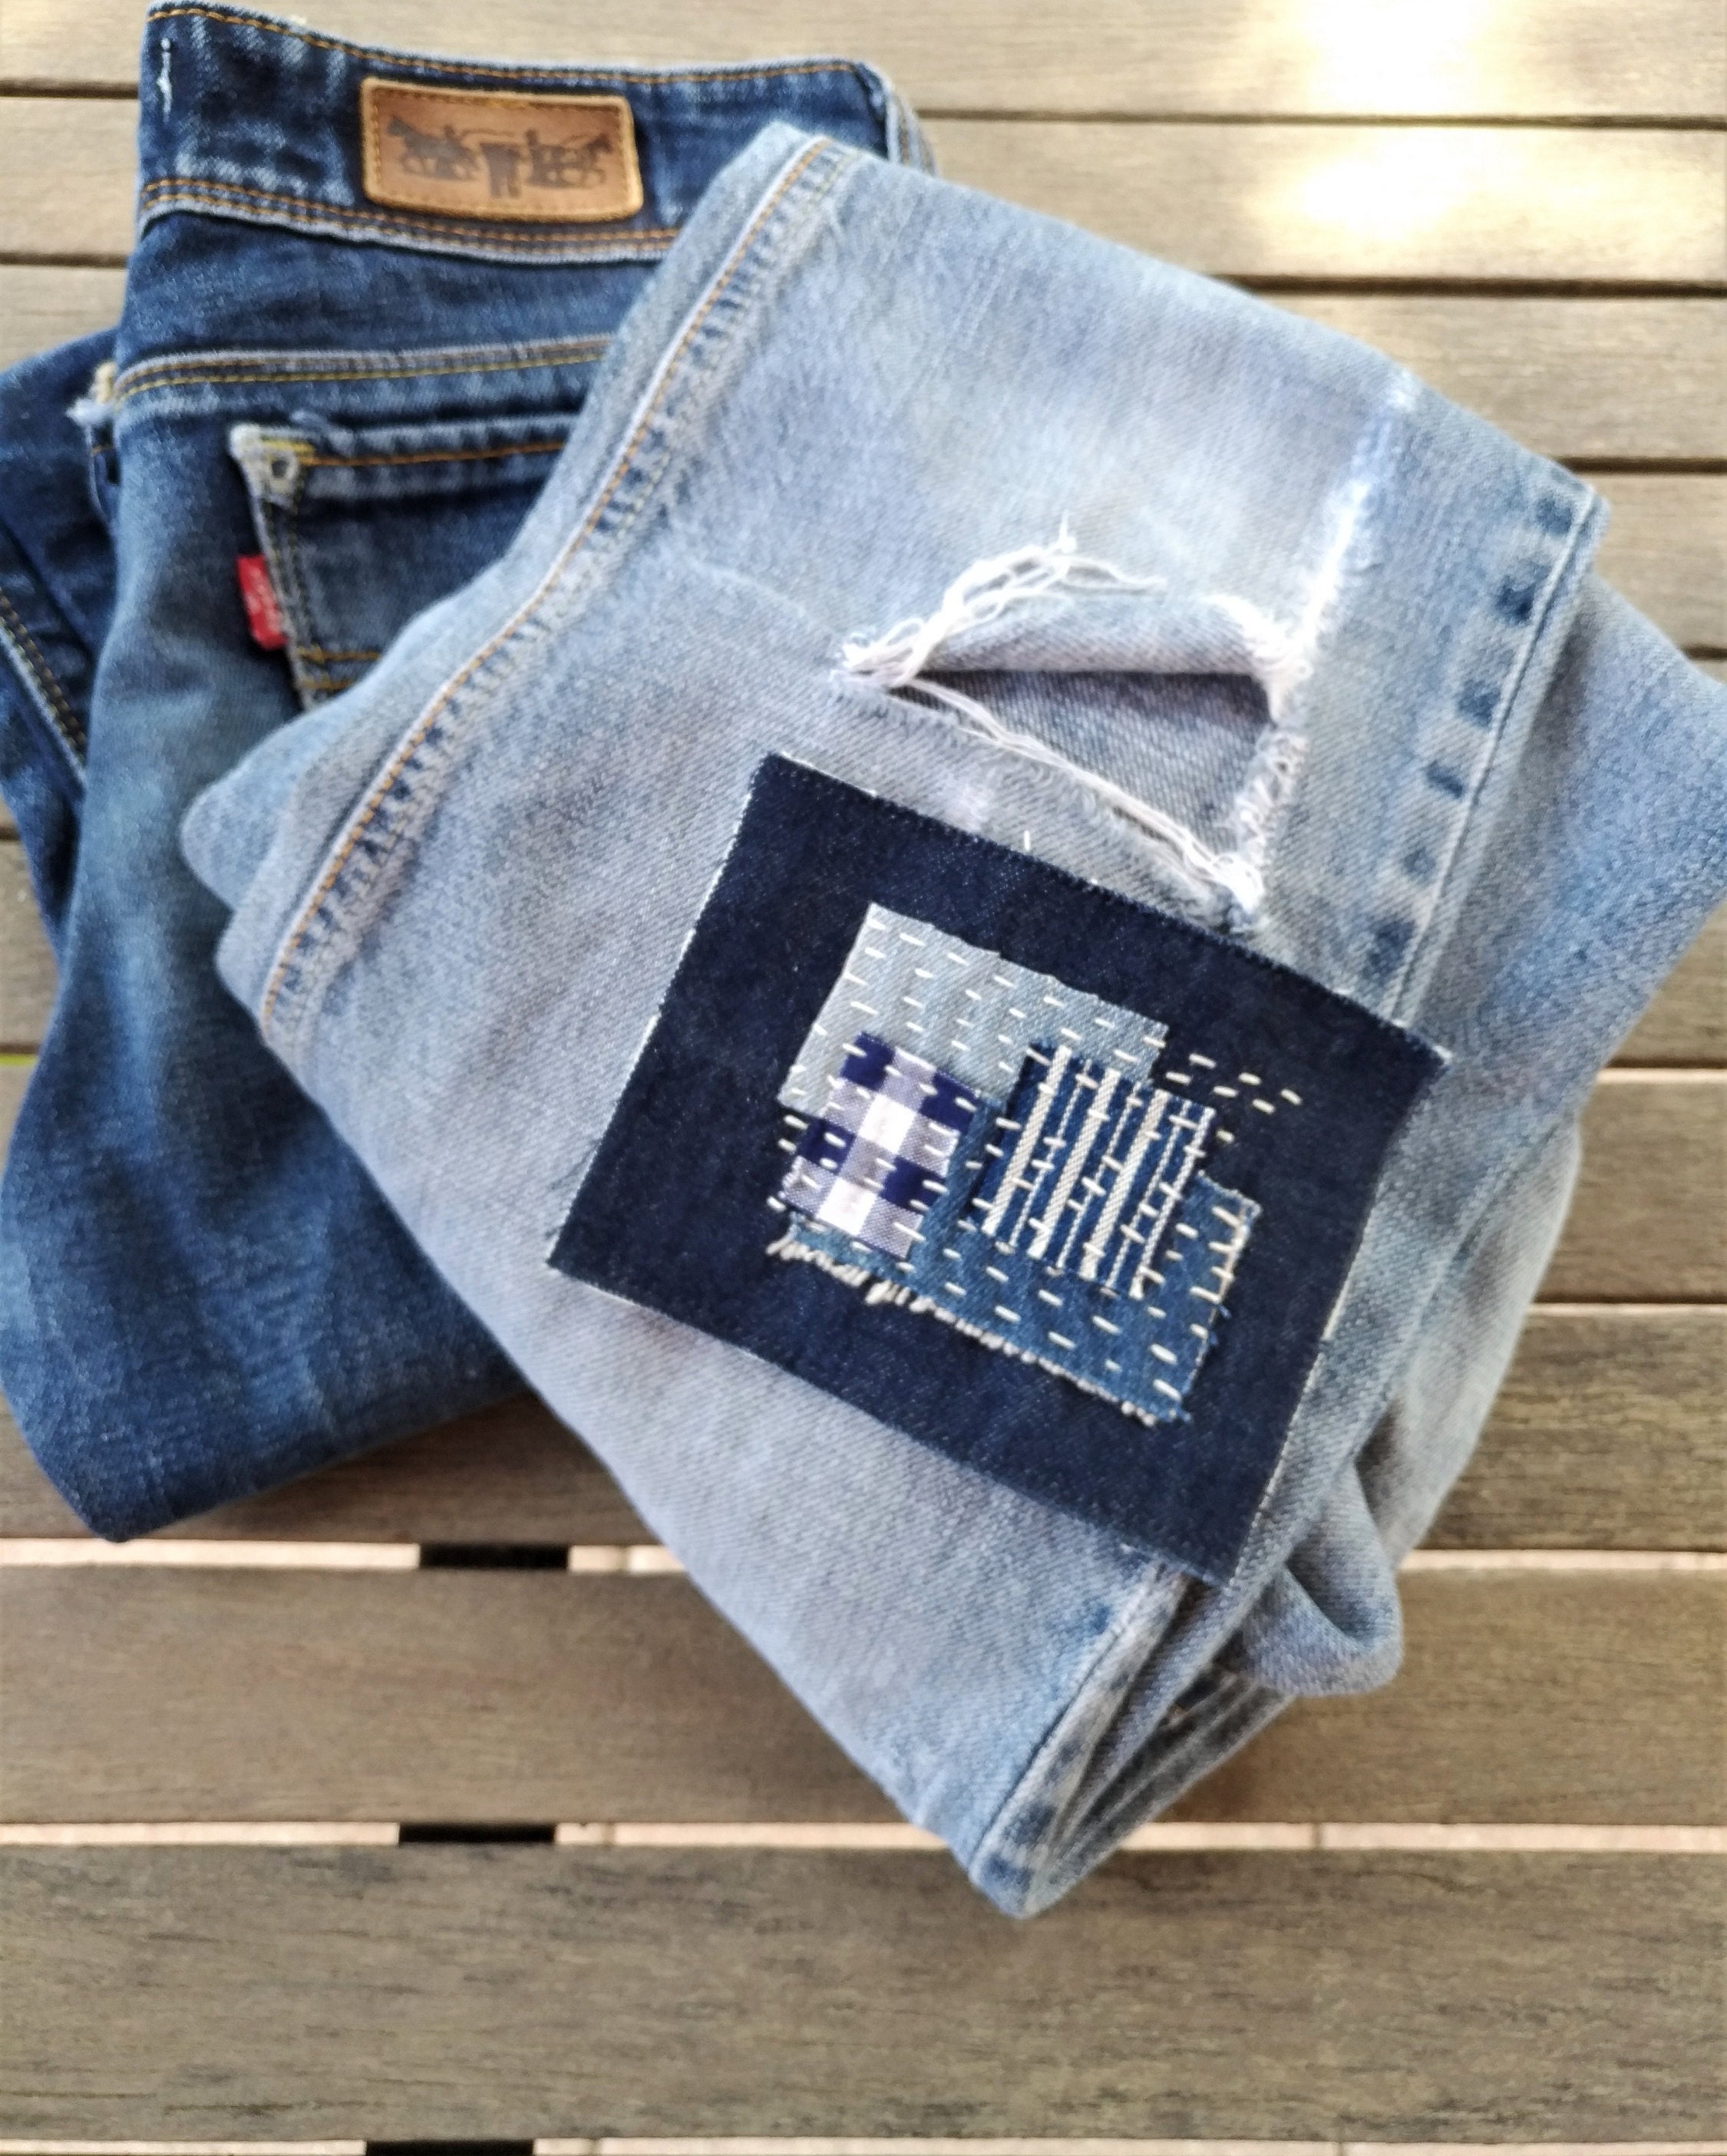 Boro Denim Applique from Recycled Jeans Sashiko Hand Stitch | Etsy